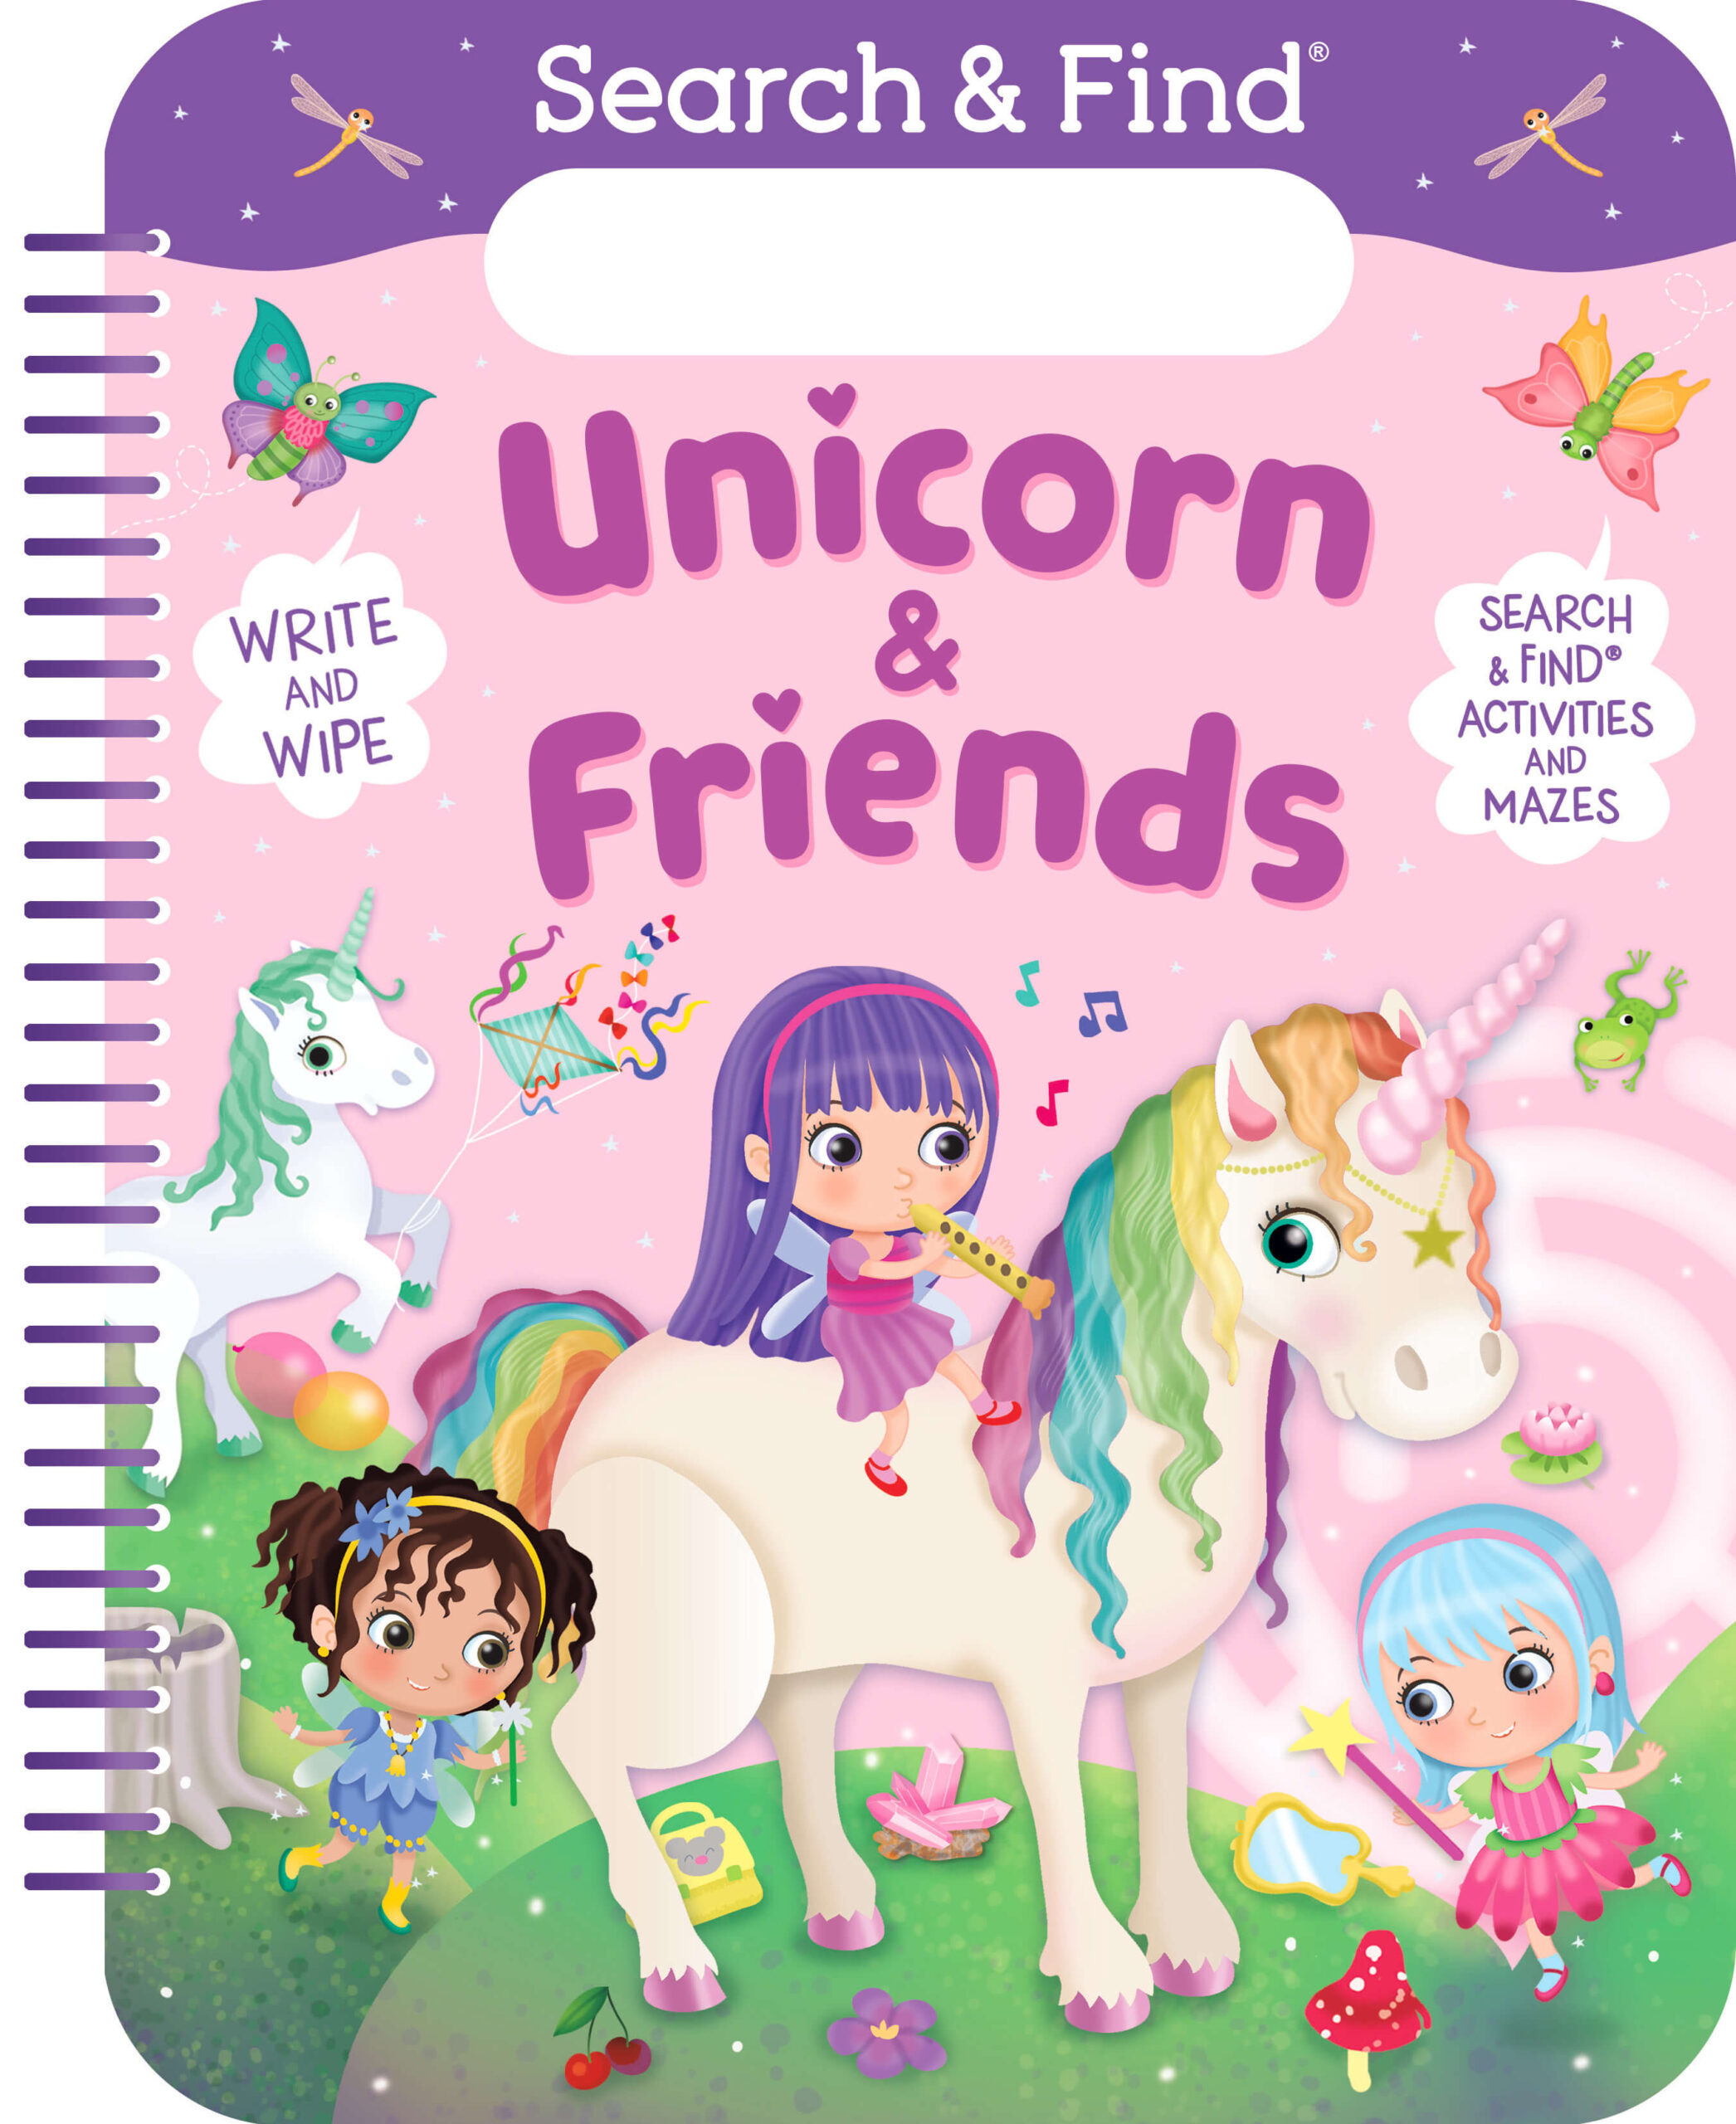 Search & Find: Unicorn & Friends